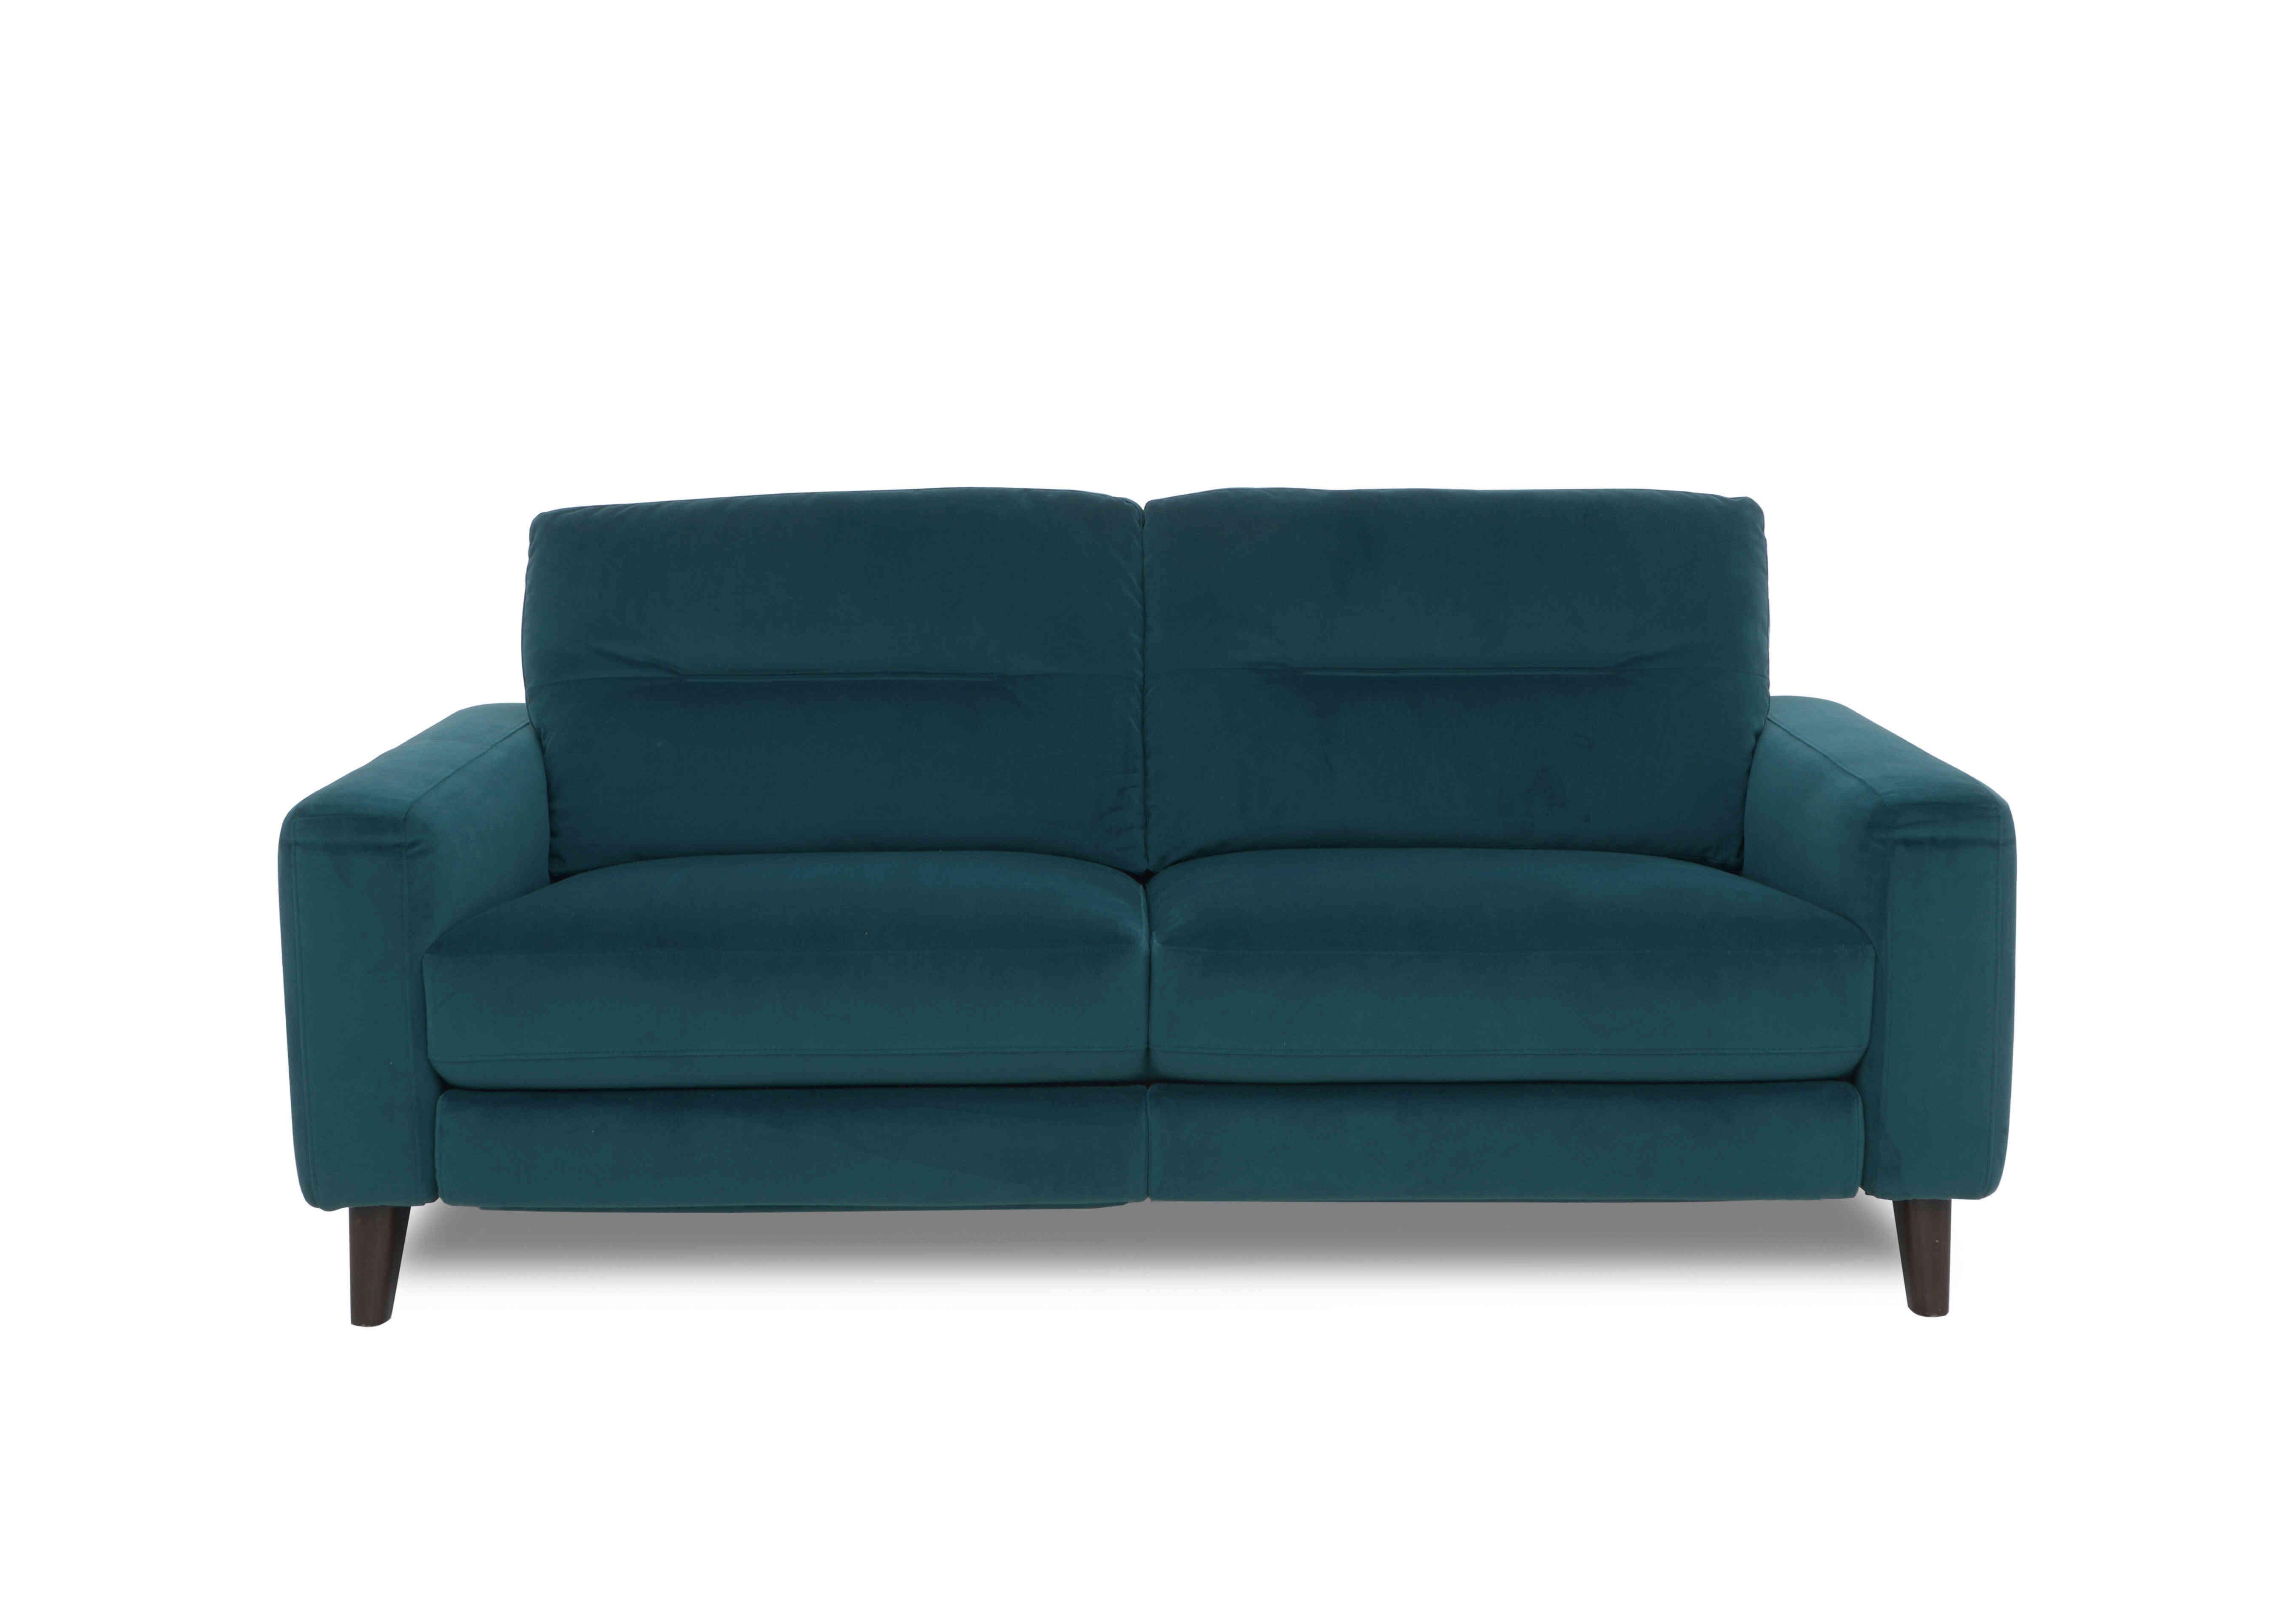 Jules 3 Seater Fabric Sofa in Fab-Meg-R36 Lake Green on Furniture Village